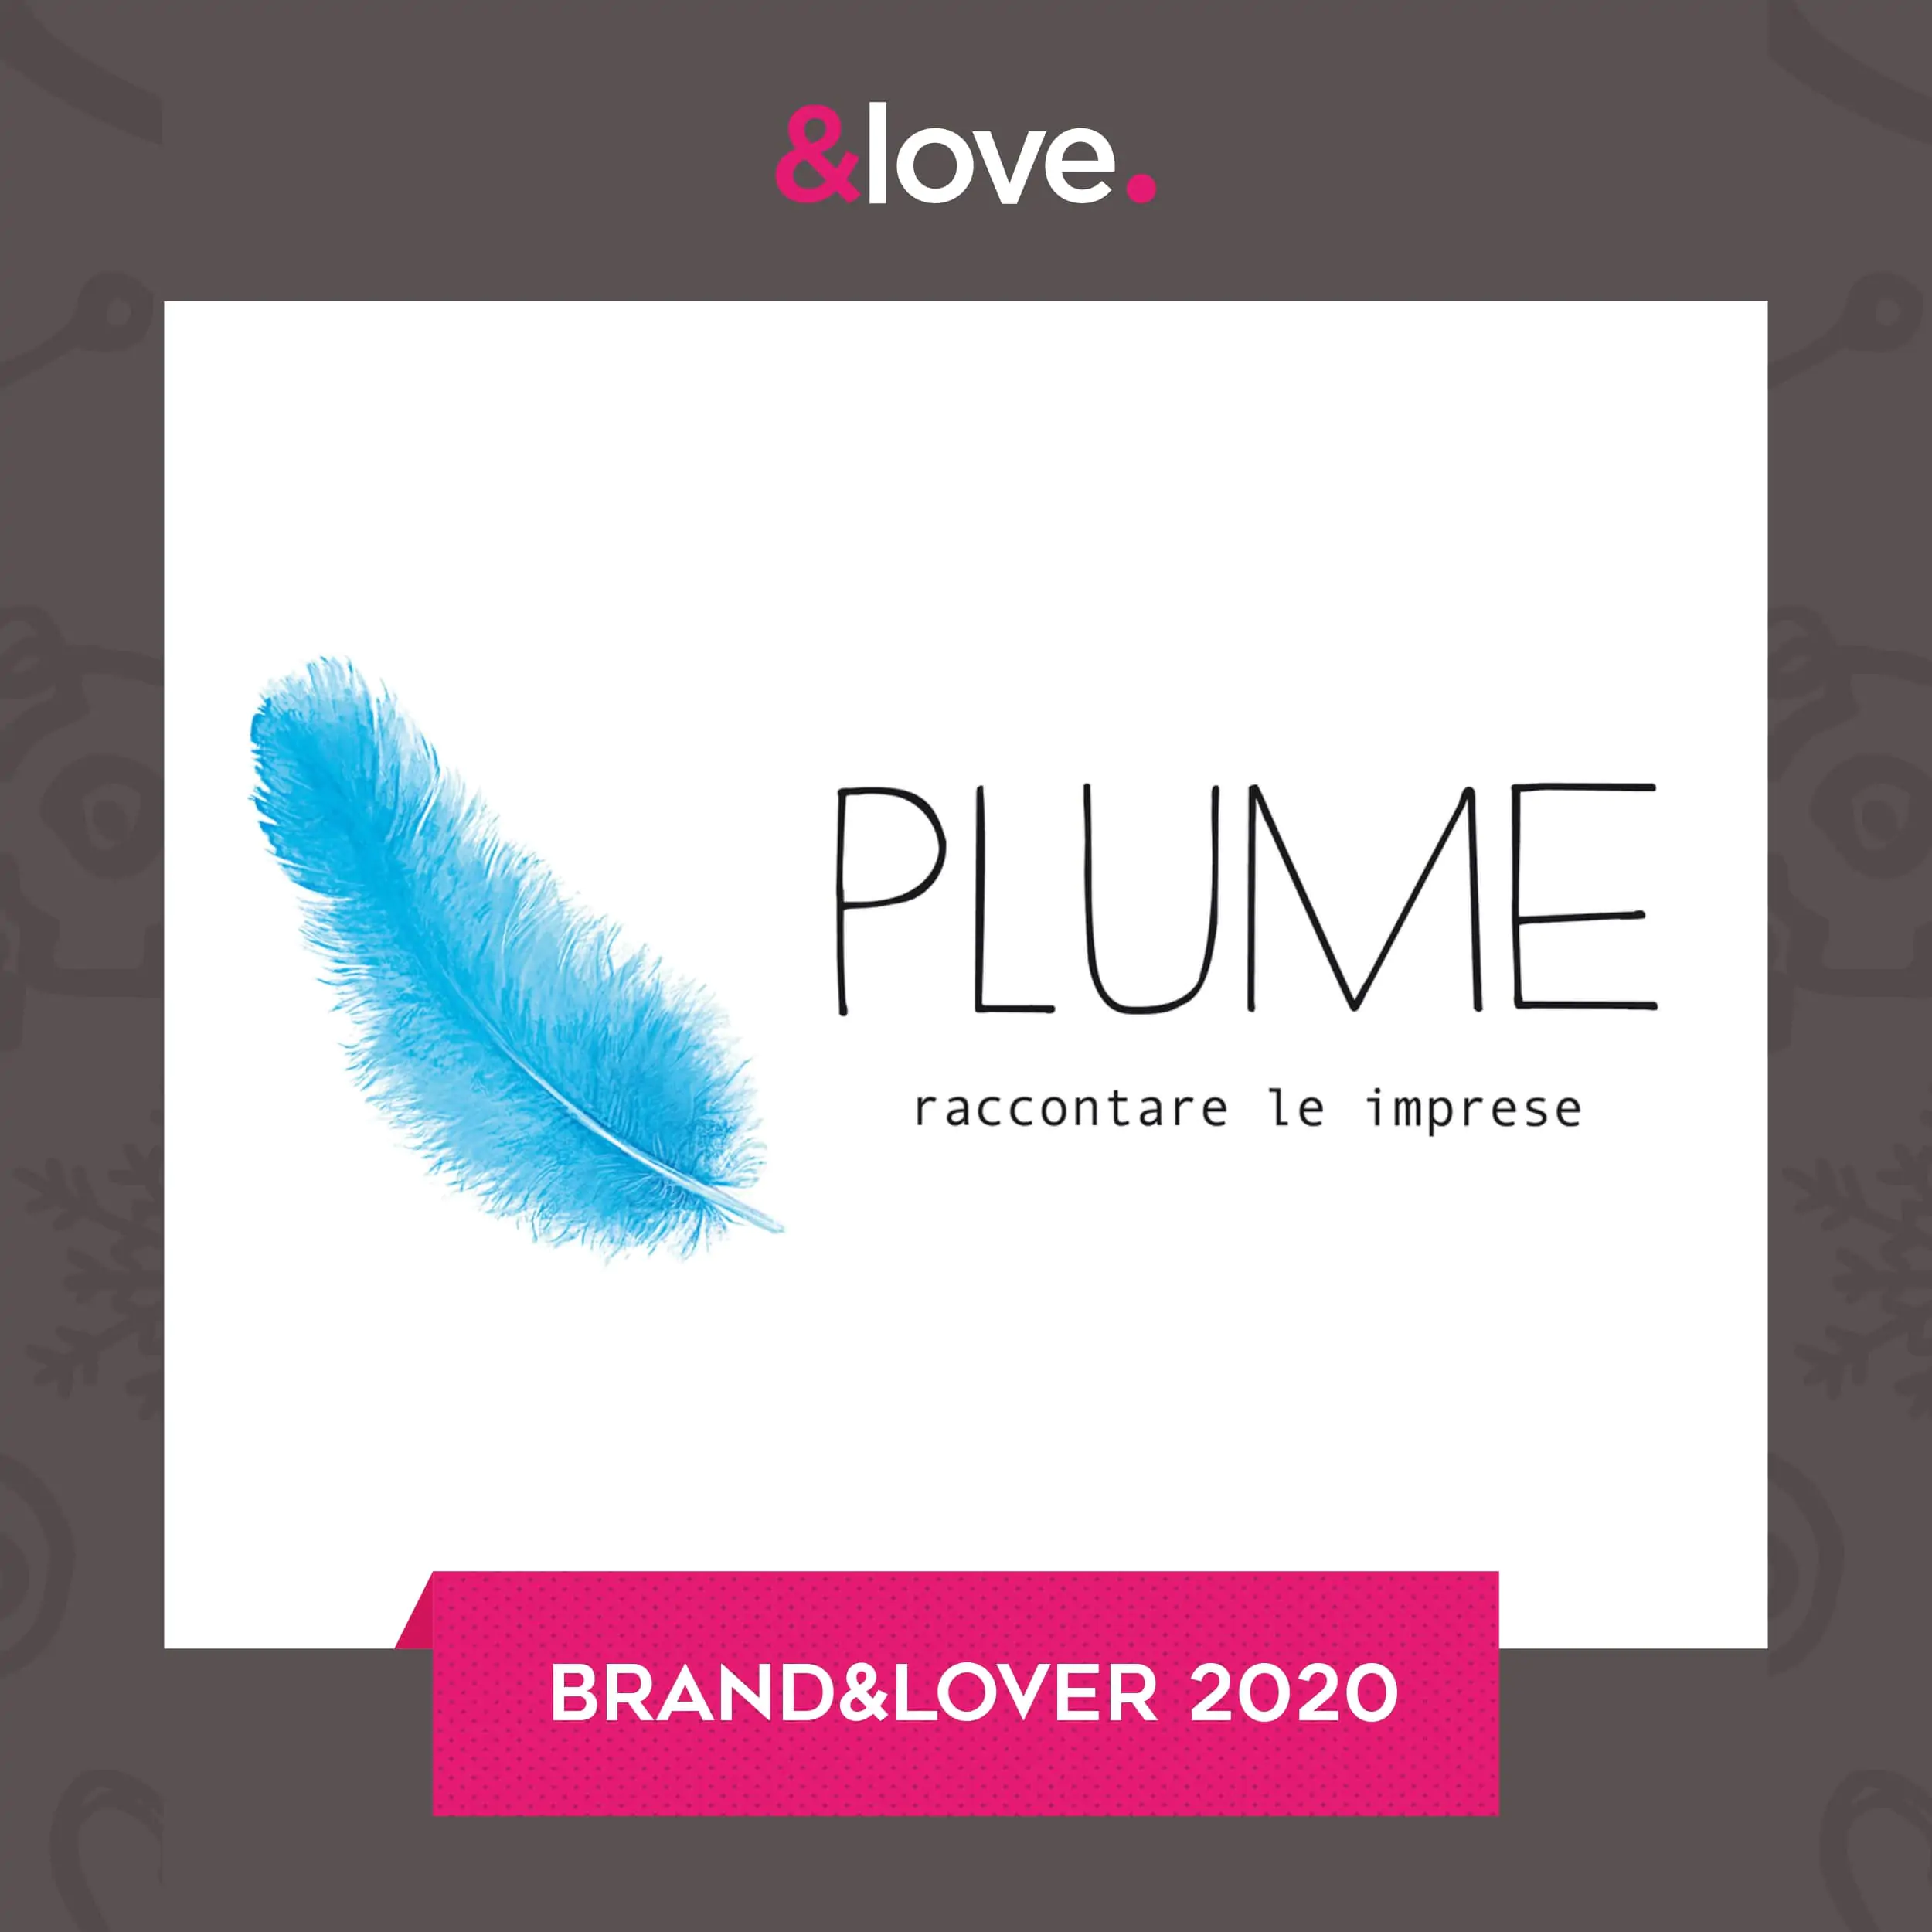 plume seoandlove 2020